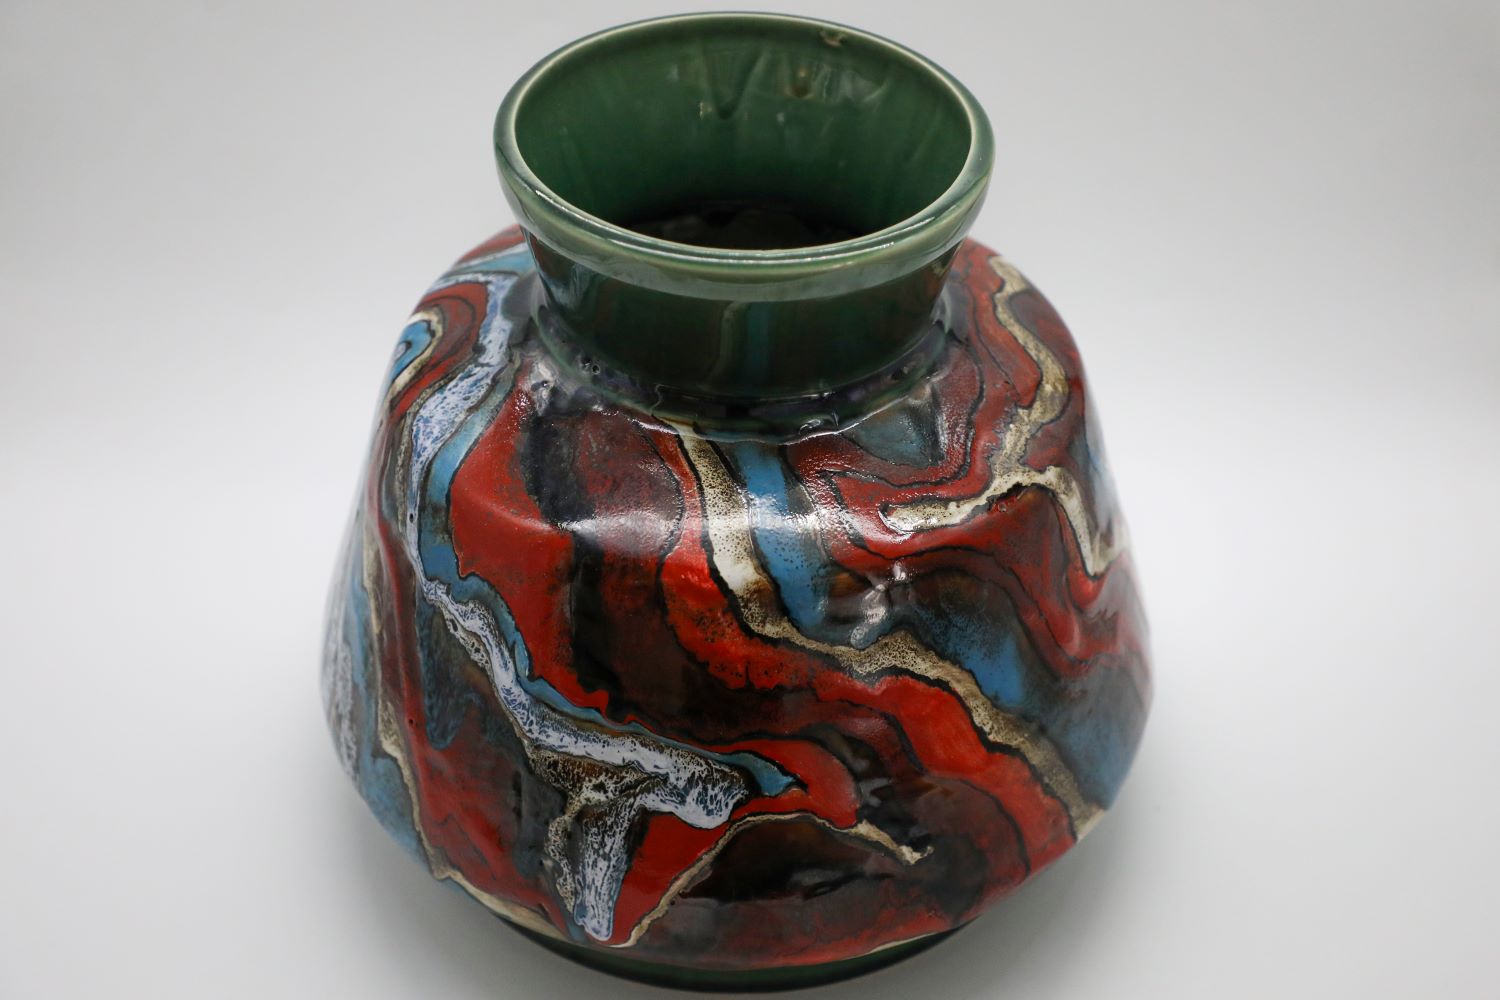 Gorgeous Highland Vase - Vietnamese Ceramic Artwork by Artist Nguyen Thu Thuy